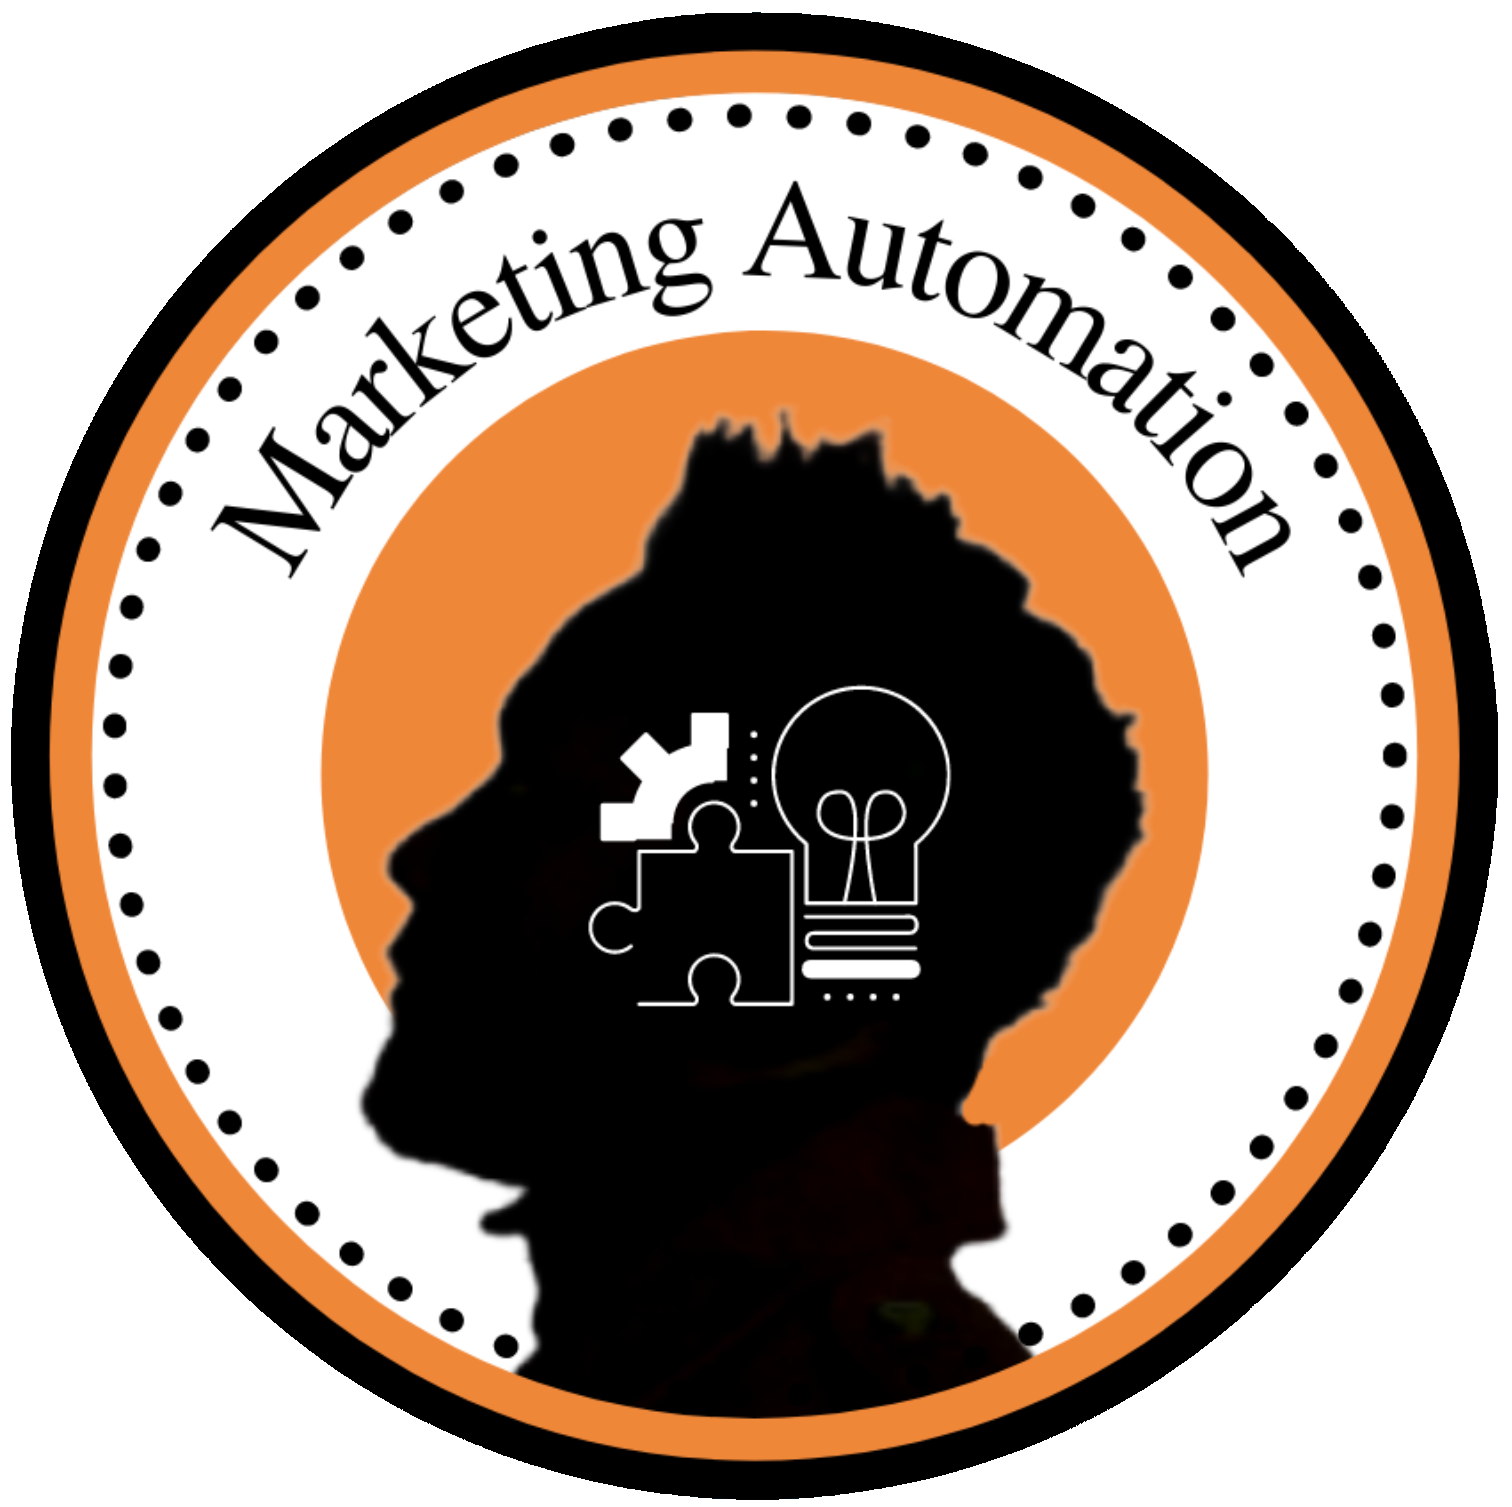 Marketing-Automation